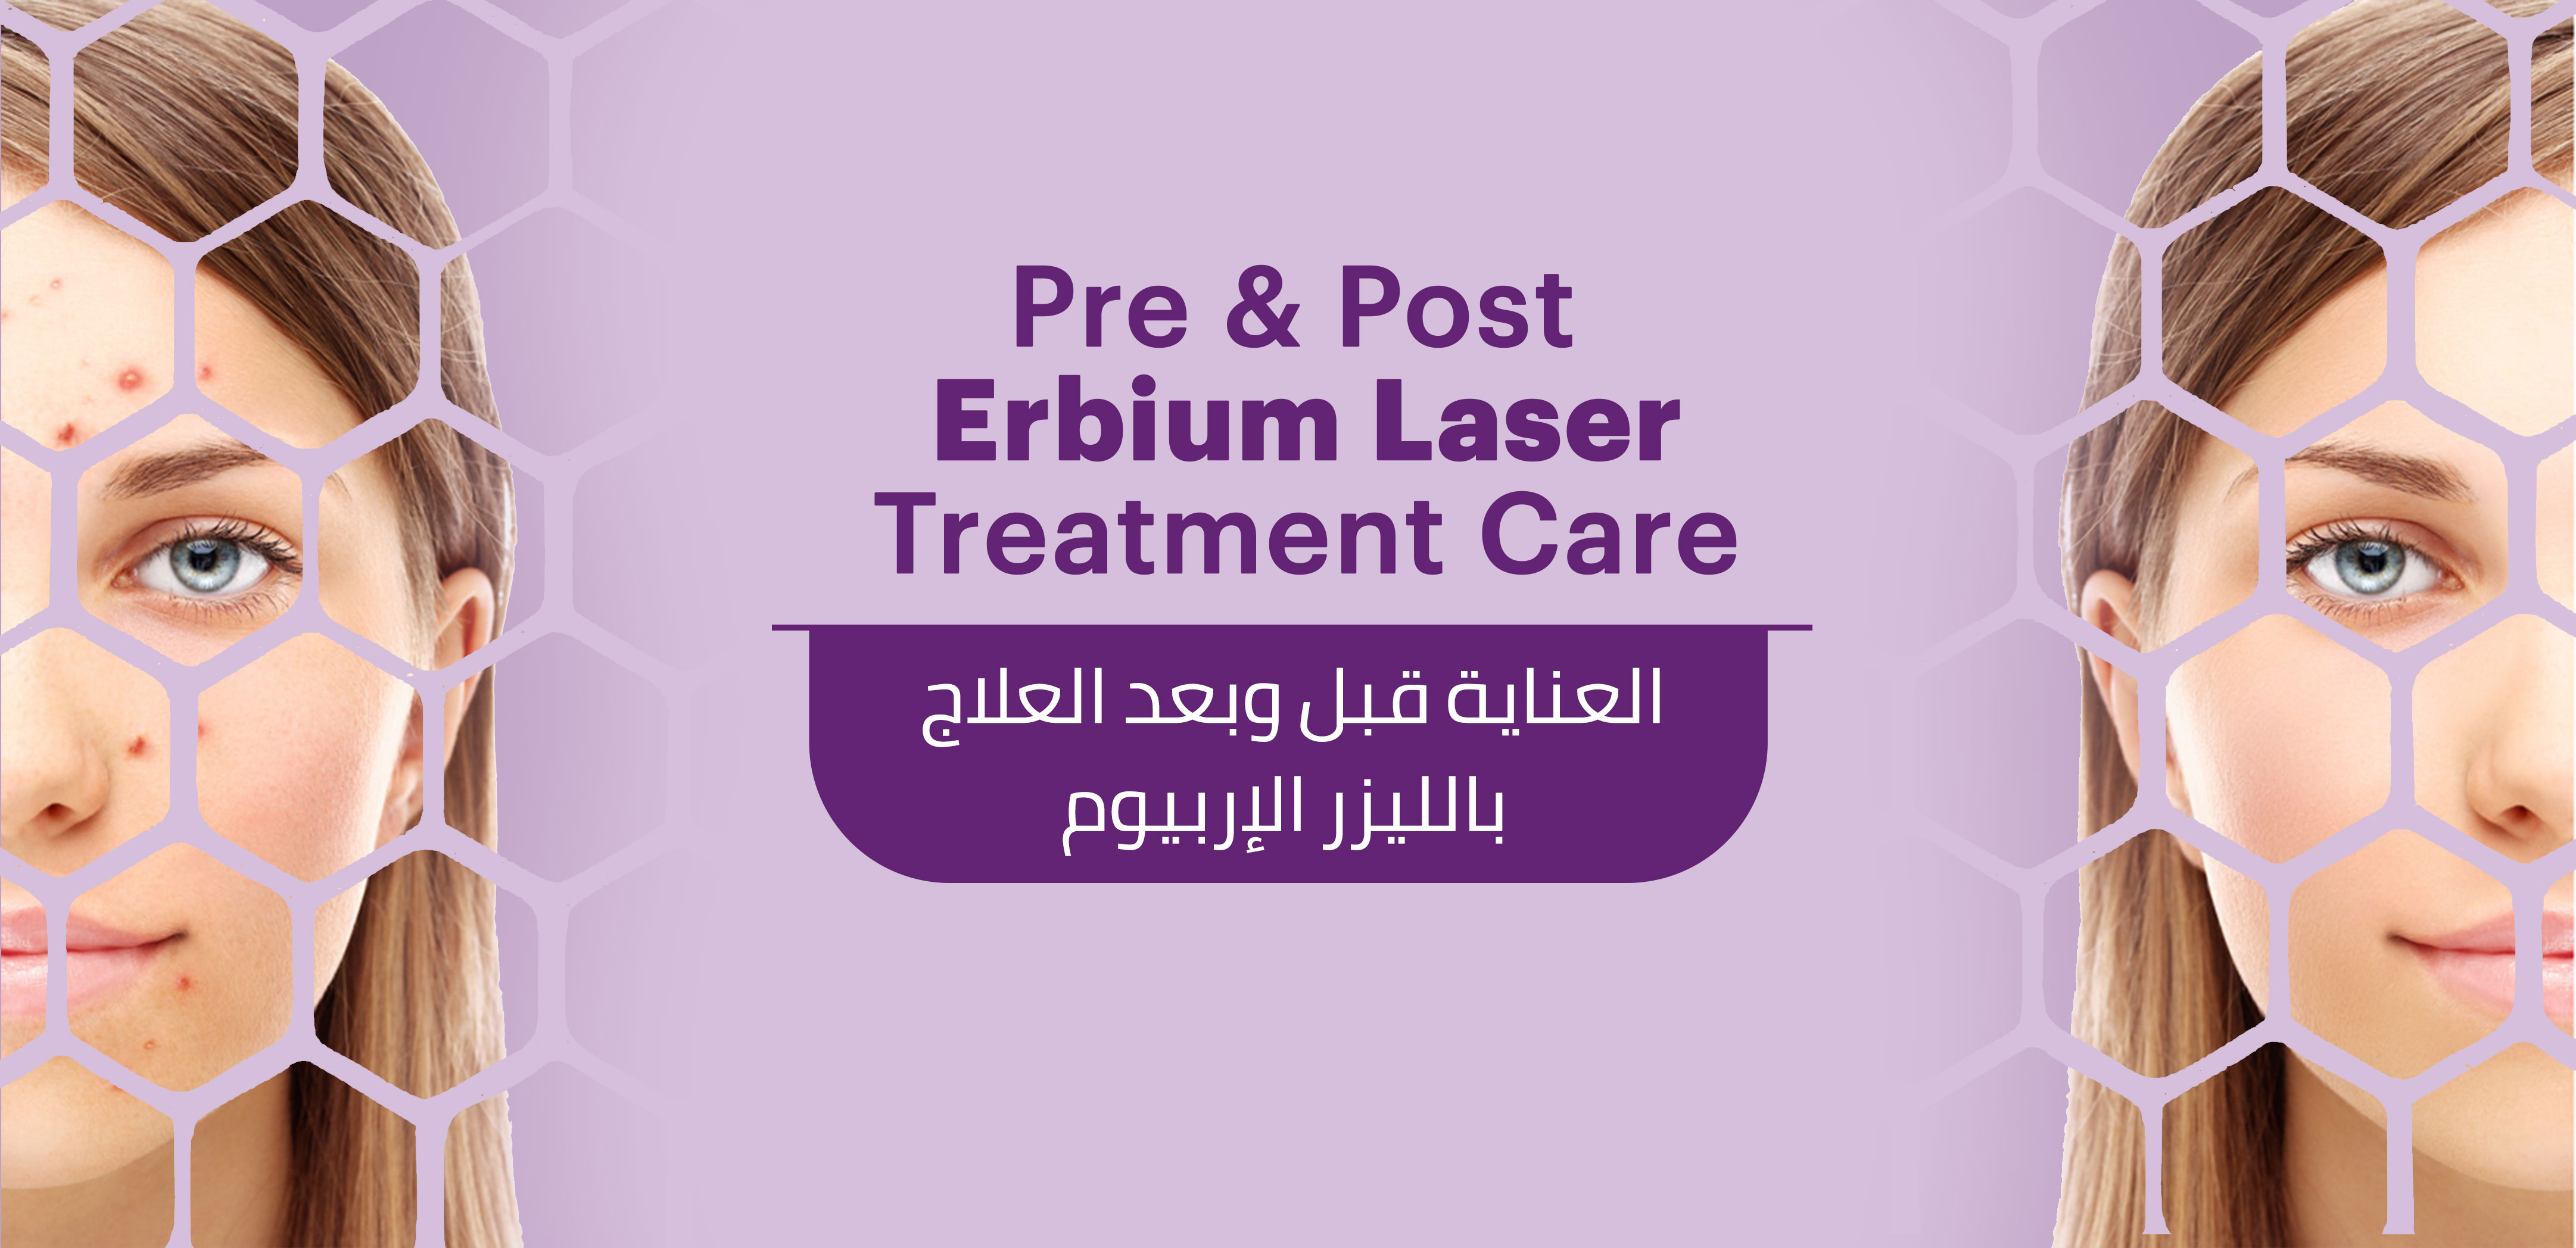 PRE & POST ERBIUM LASER TREATMENT INSTRUCTION